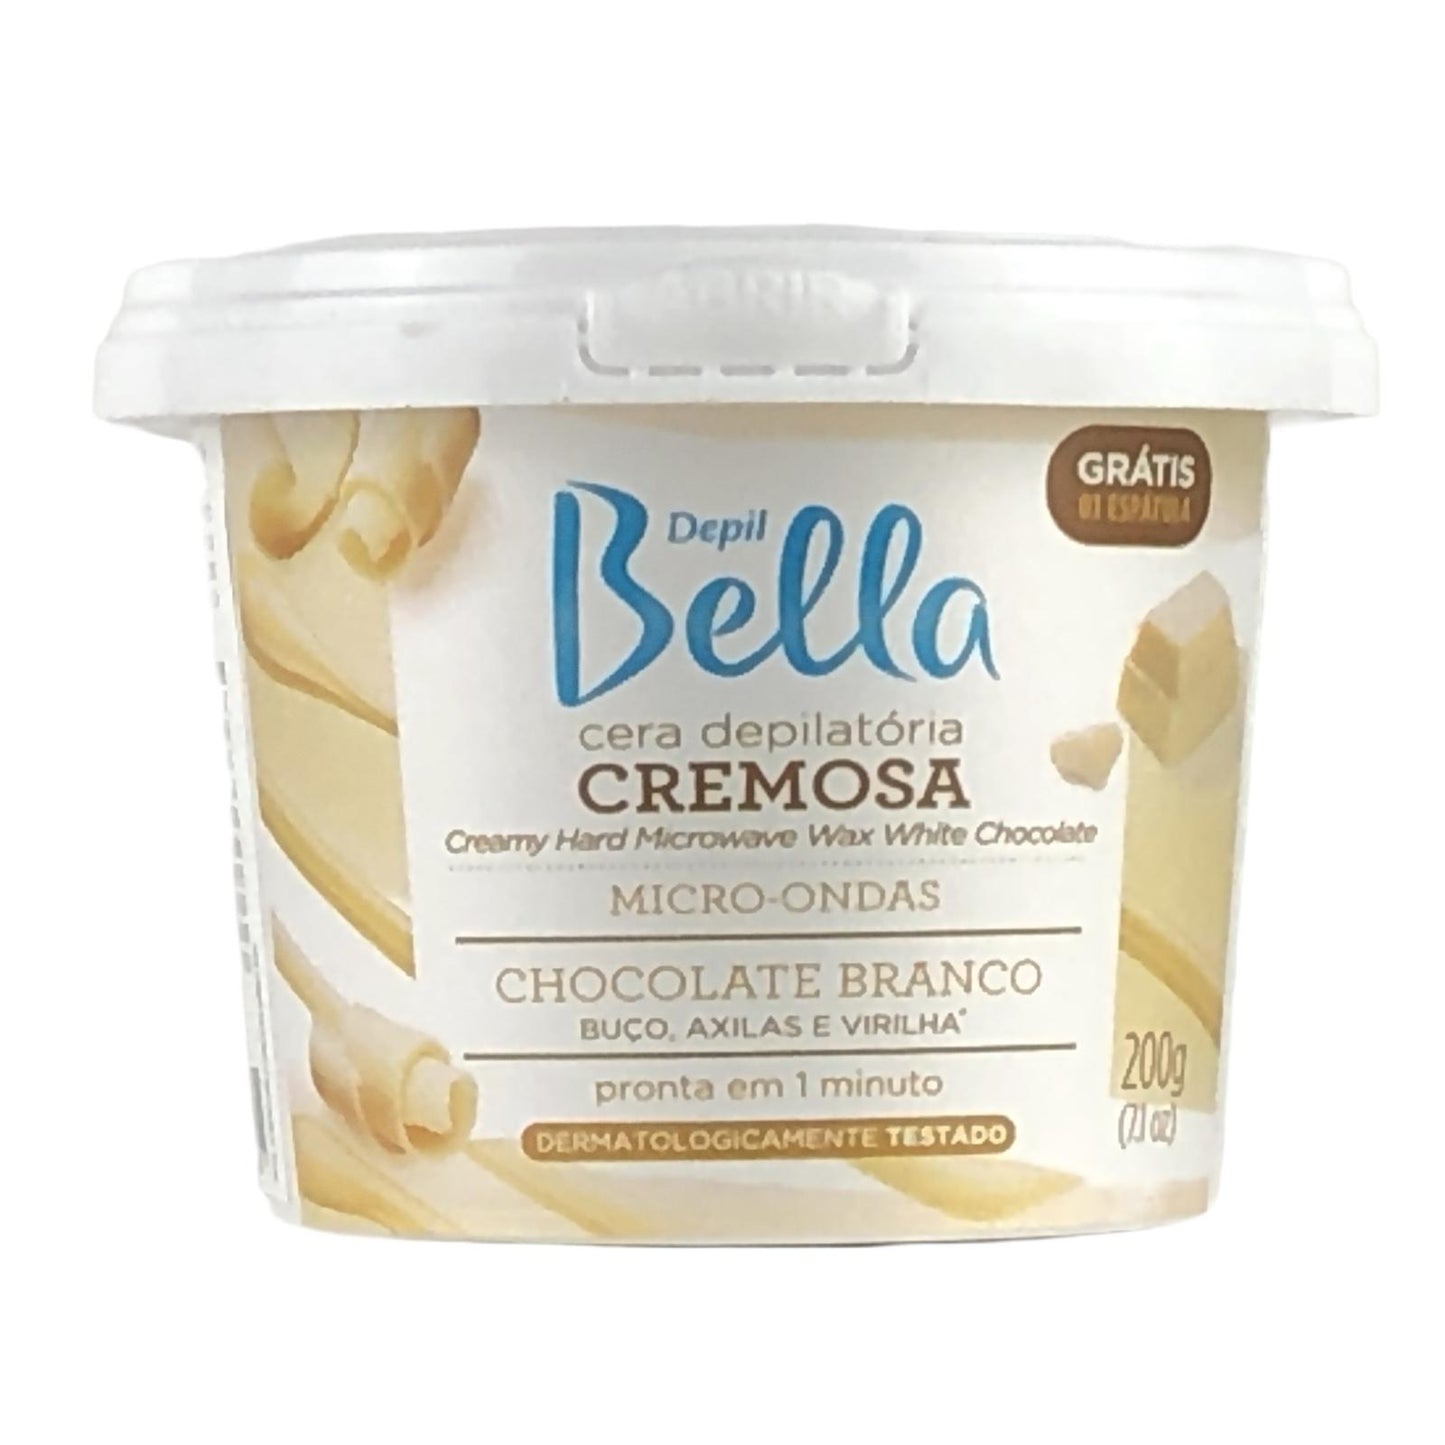 Depil Bella Creamy Hard Microwave Wax White Chocolate 200 gr - Depilcompany